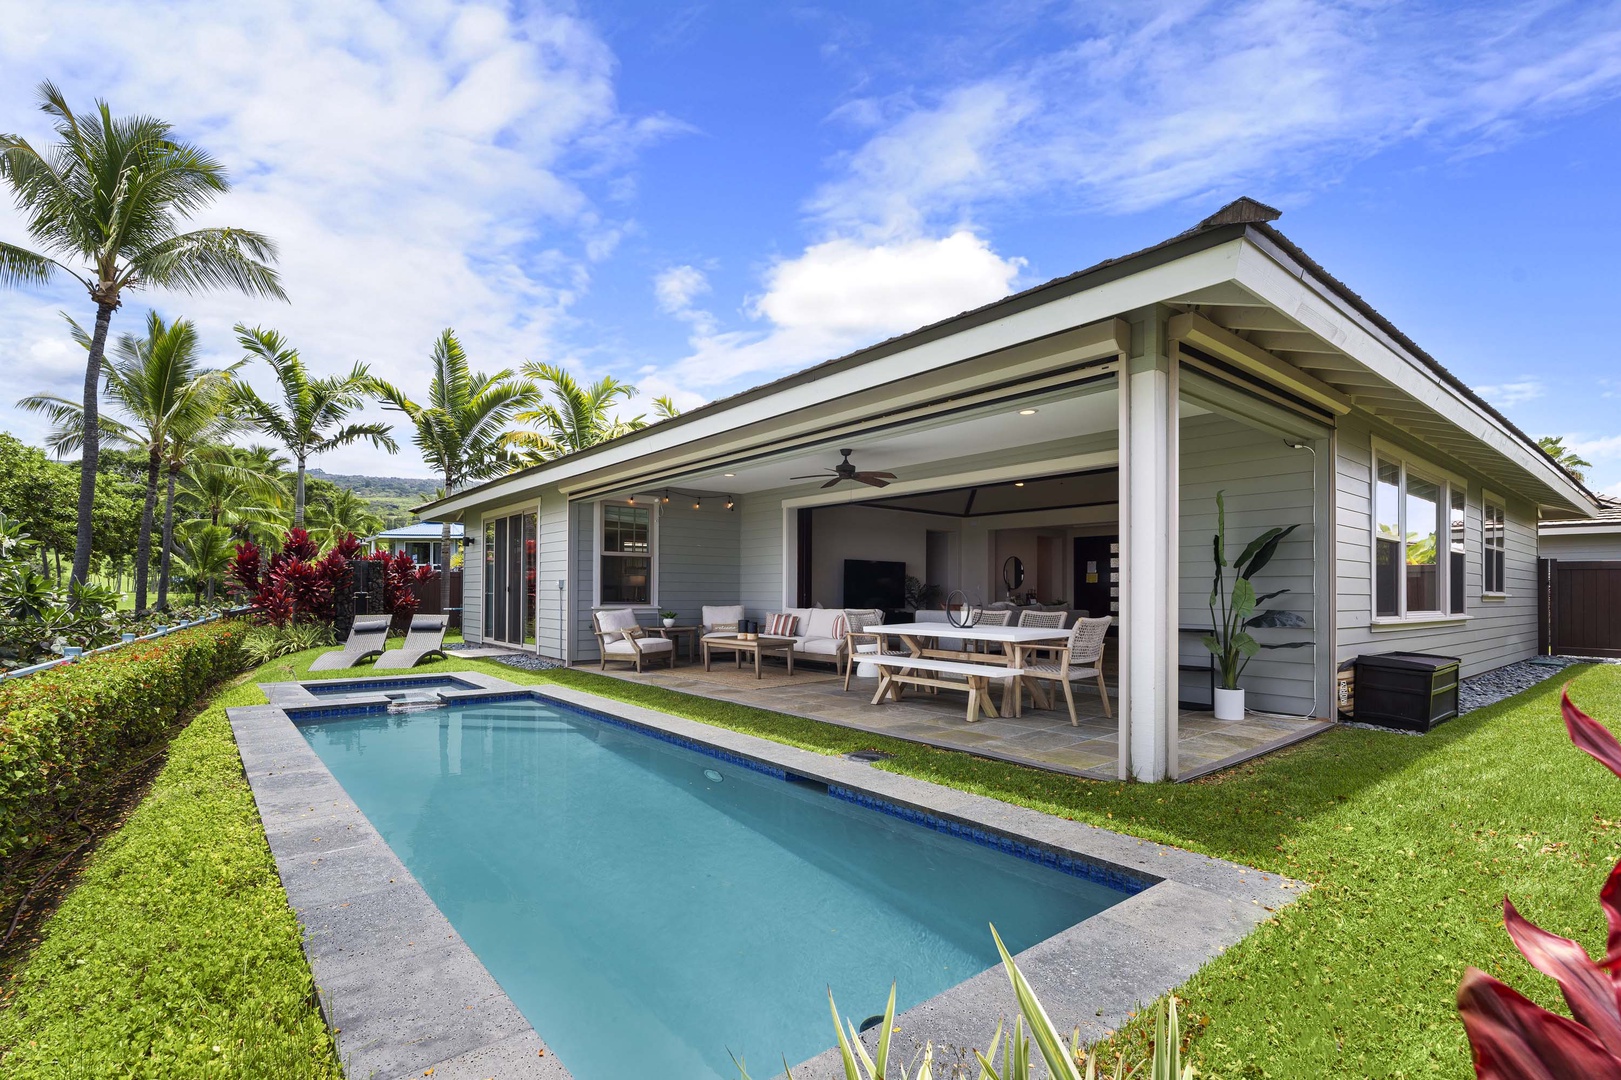 Kailua Kona Vacation Rentals, Holua Kai #27 - Salt water pool and spa for your enjoyment!